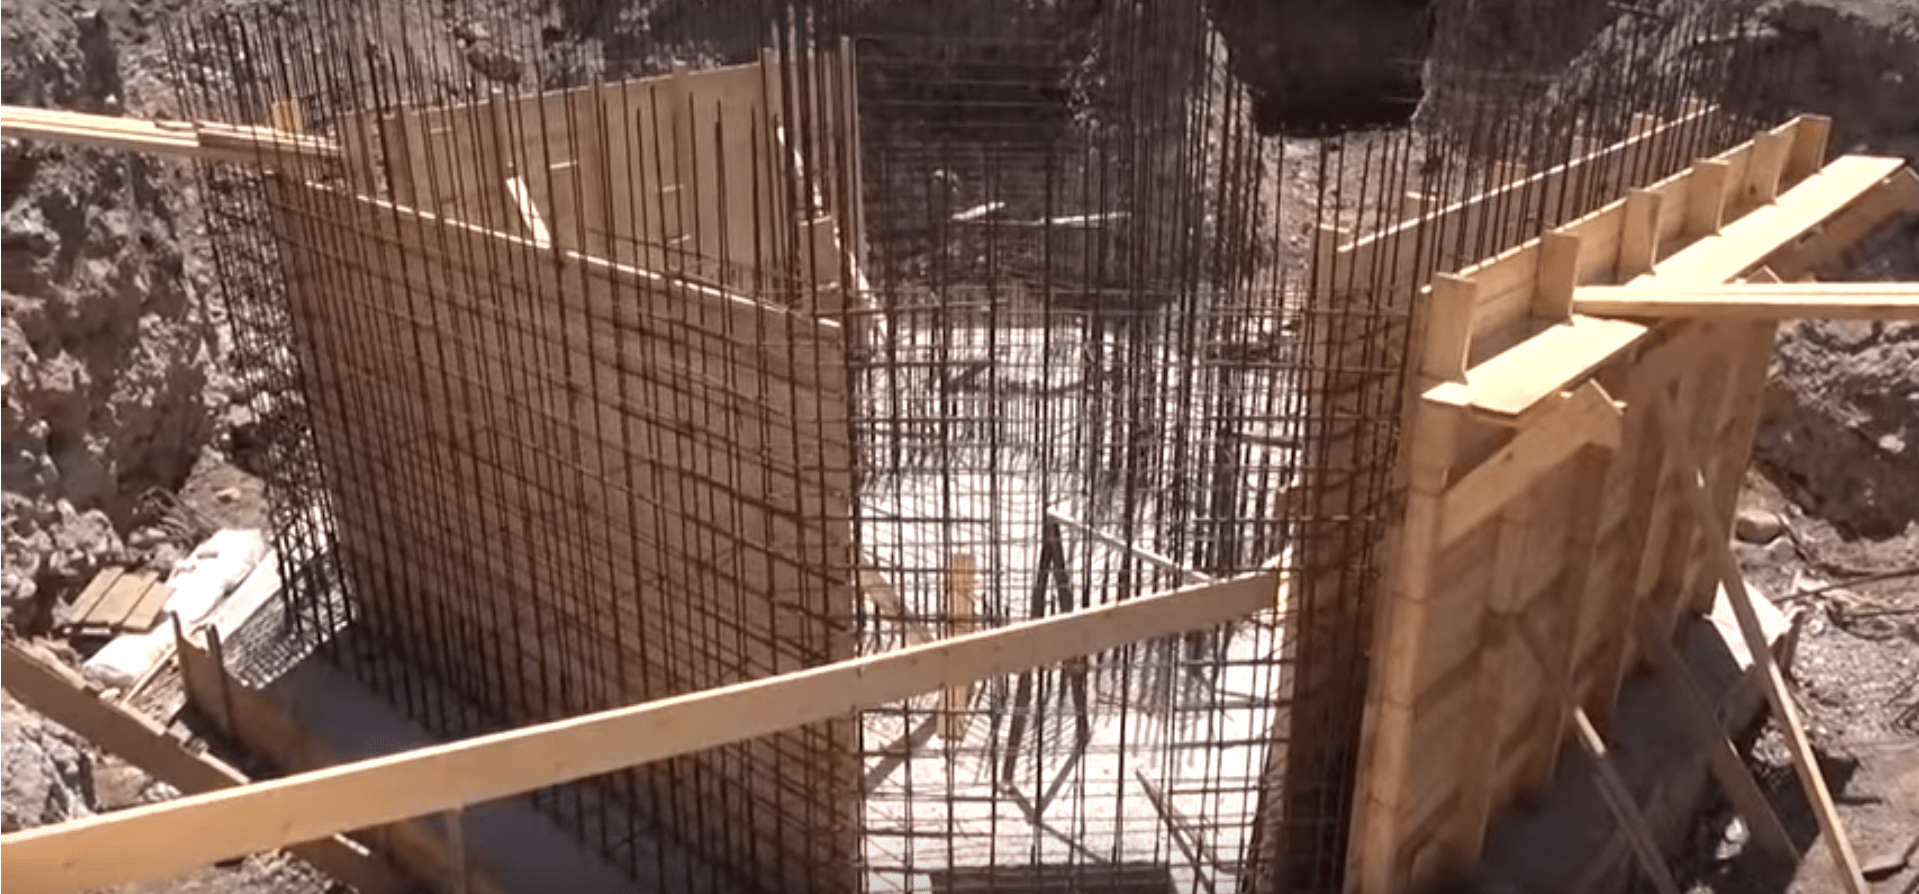 Реконструкция парка в Ереване. 18 мая 2018 года. Фото Армине Мартиросян для "Кавказского узла"